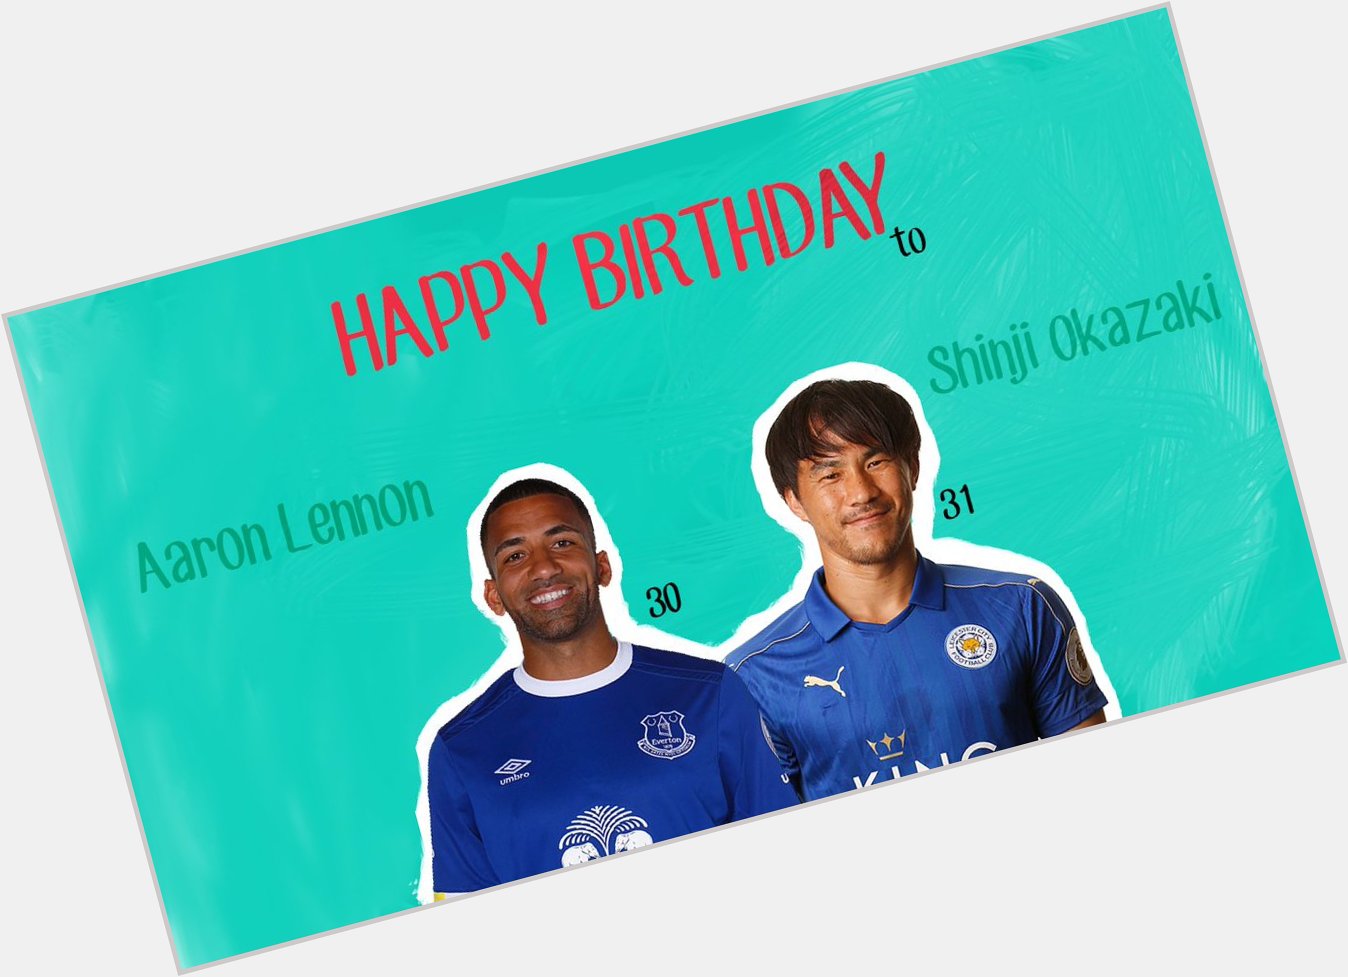 Happy Birthday to Aaron Lennon (30) and Shinji Okazaki (31)!! 